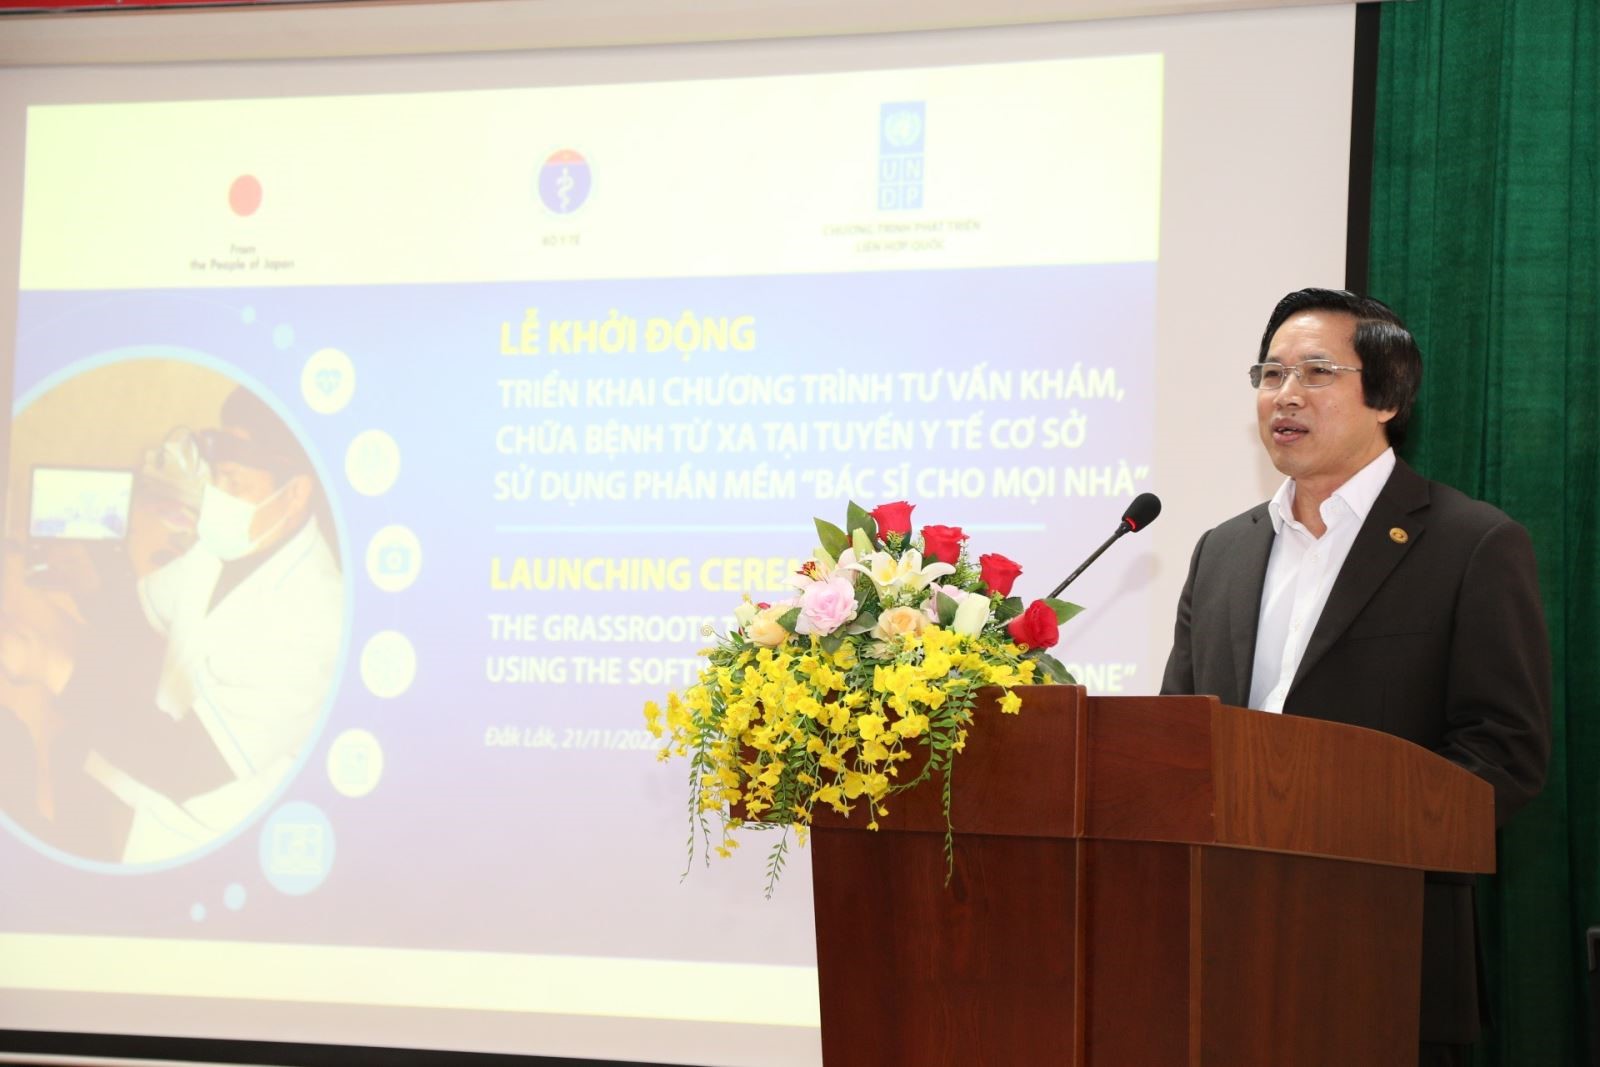 Dak Lak launches the program "Doctors for everyone”